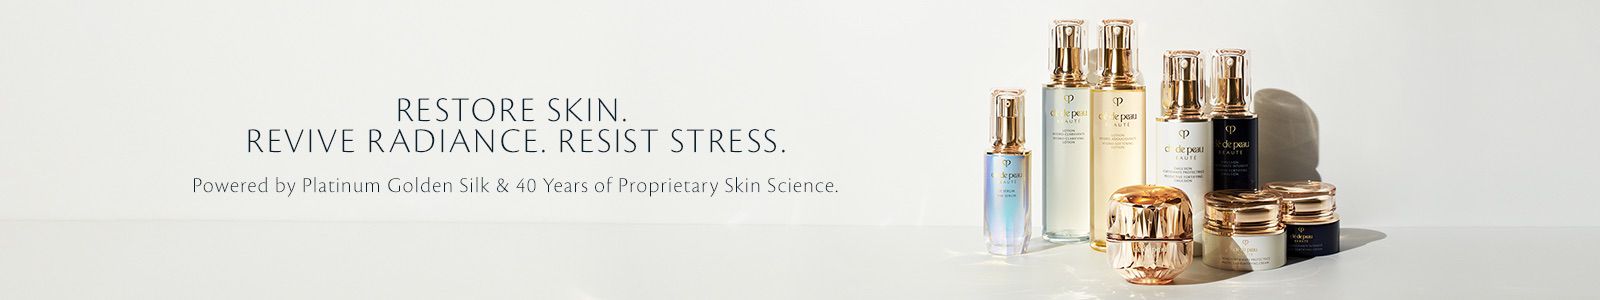 Restore Skin,, Revive Radiance, Resist Stress